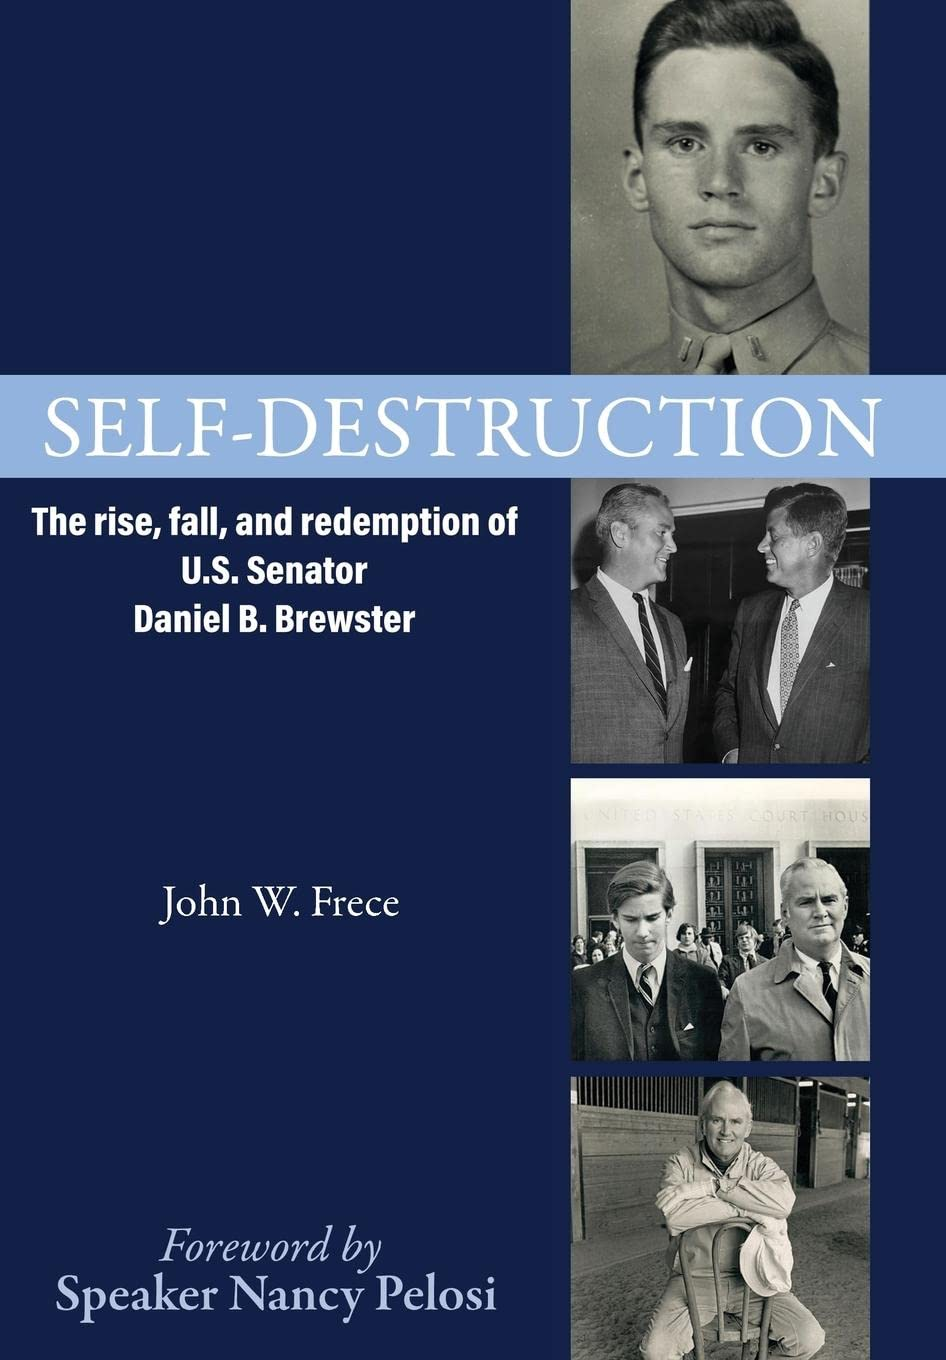 Biographer John Frece chronicles the life of U.S. Senator Daniel Brewster